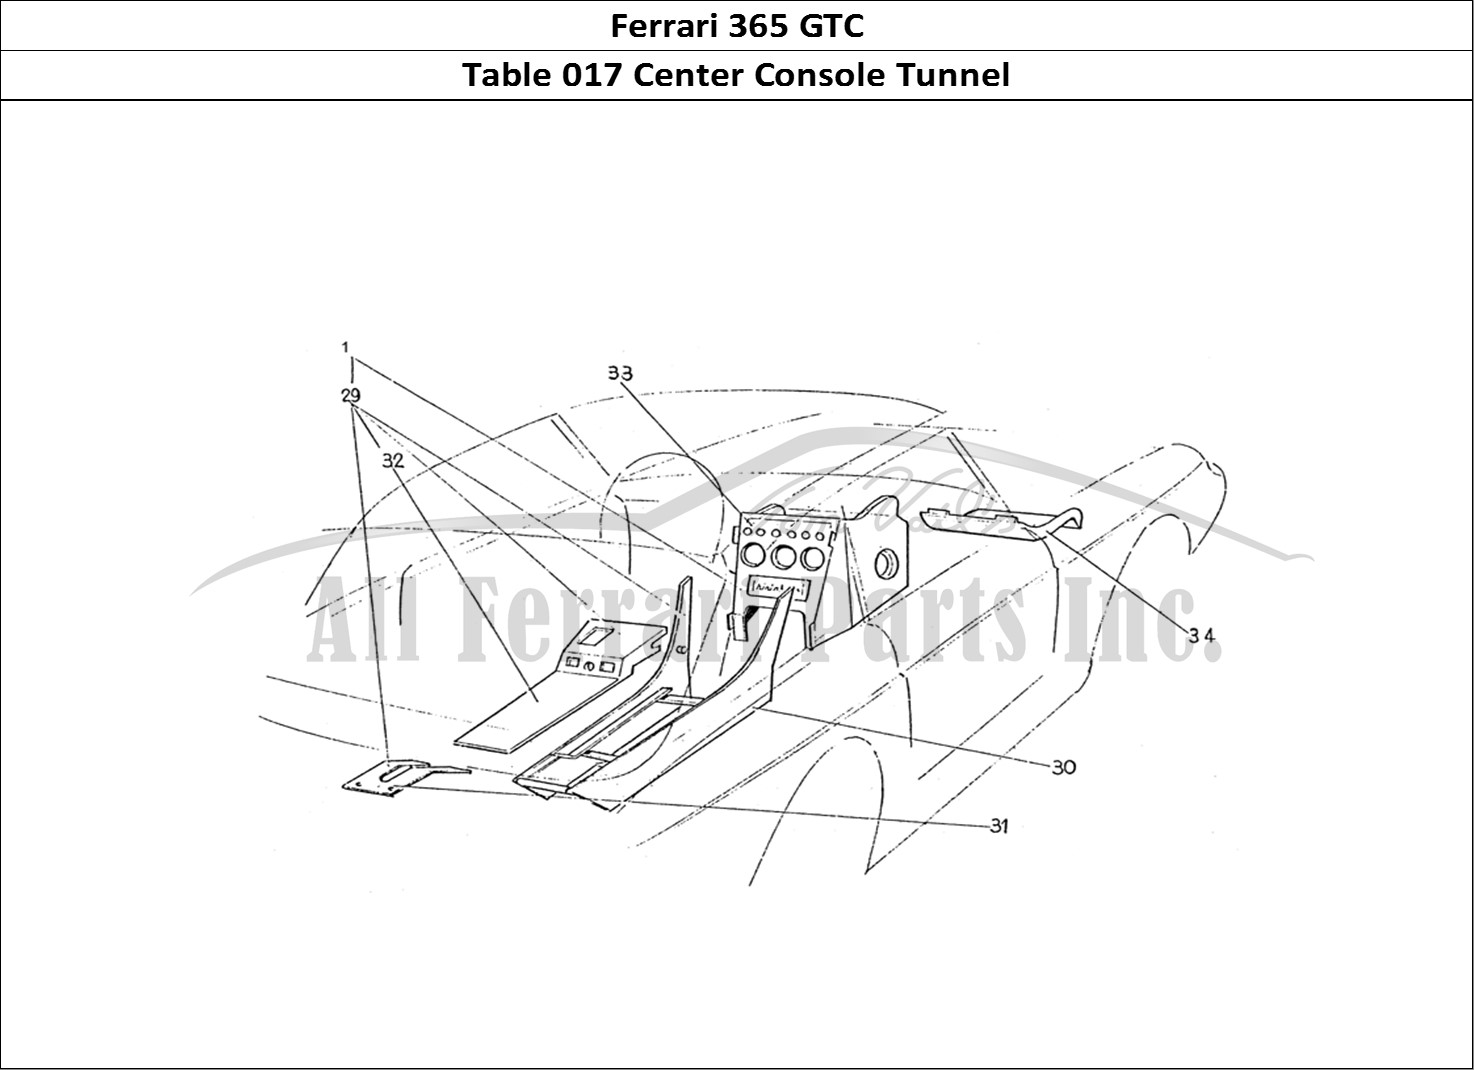 Ferrari Parts Ferrari 330 GTC (Coachwork) Page 017 Center console (series 1)